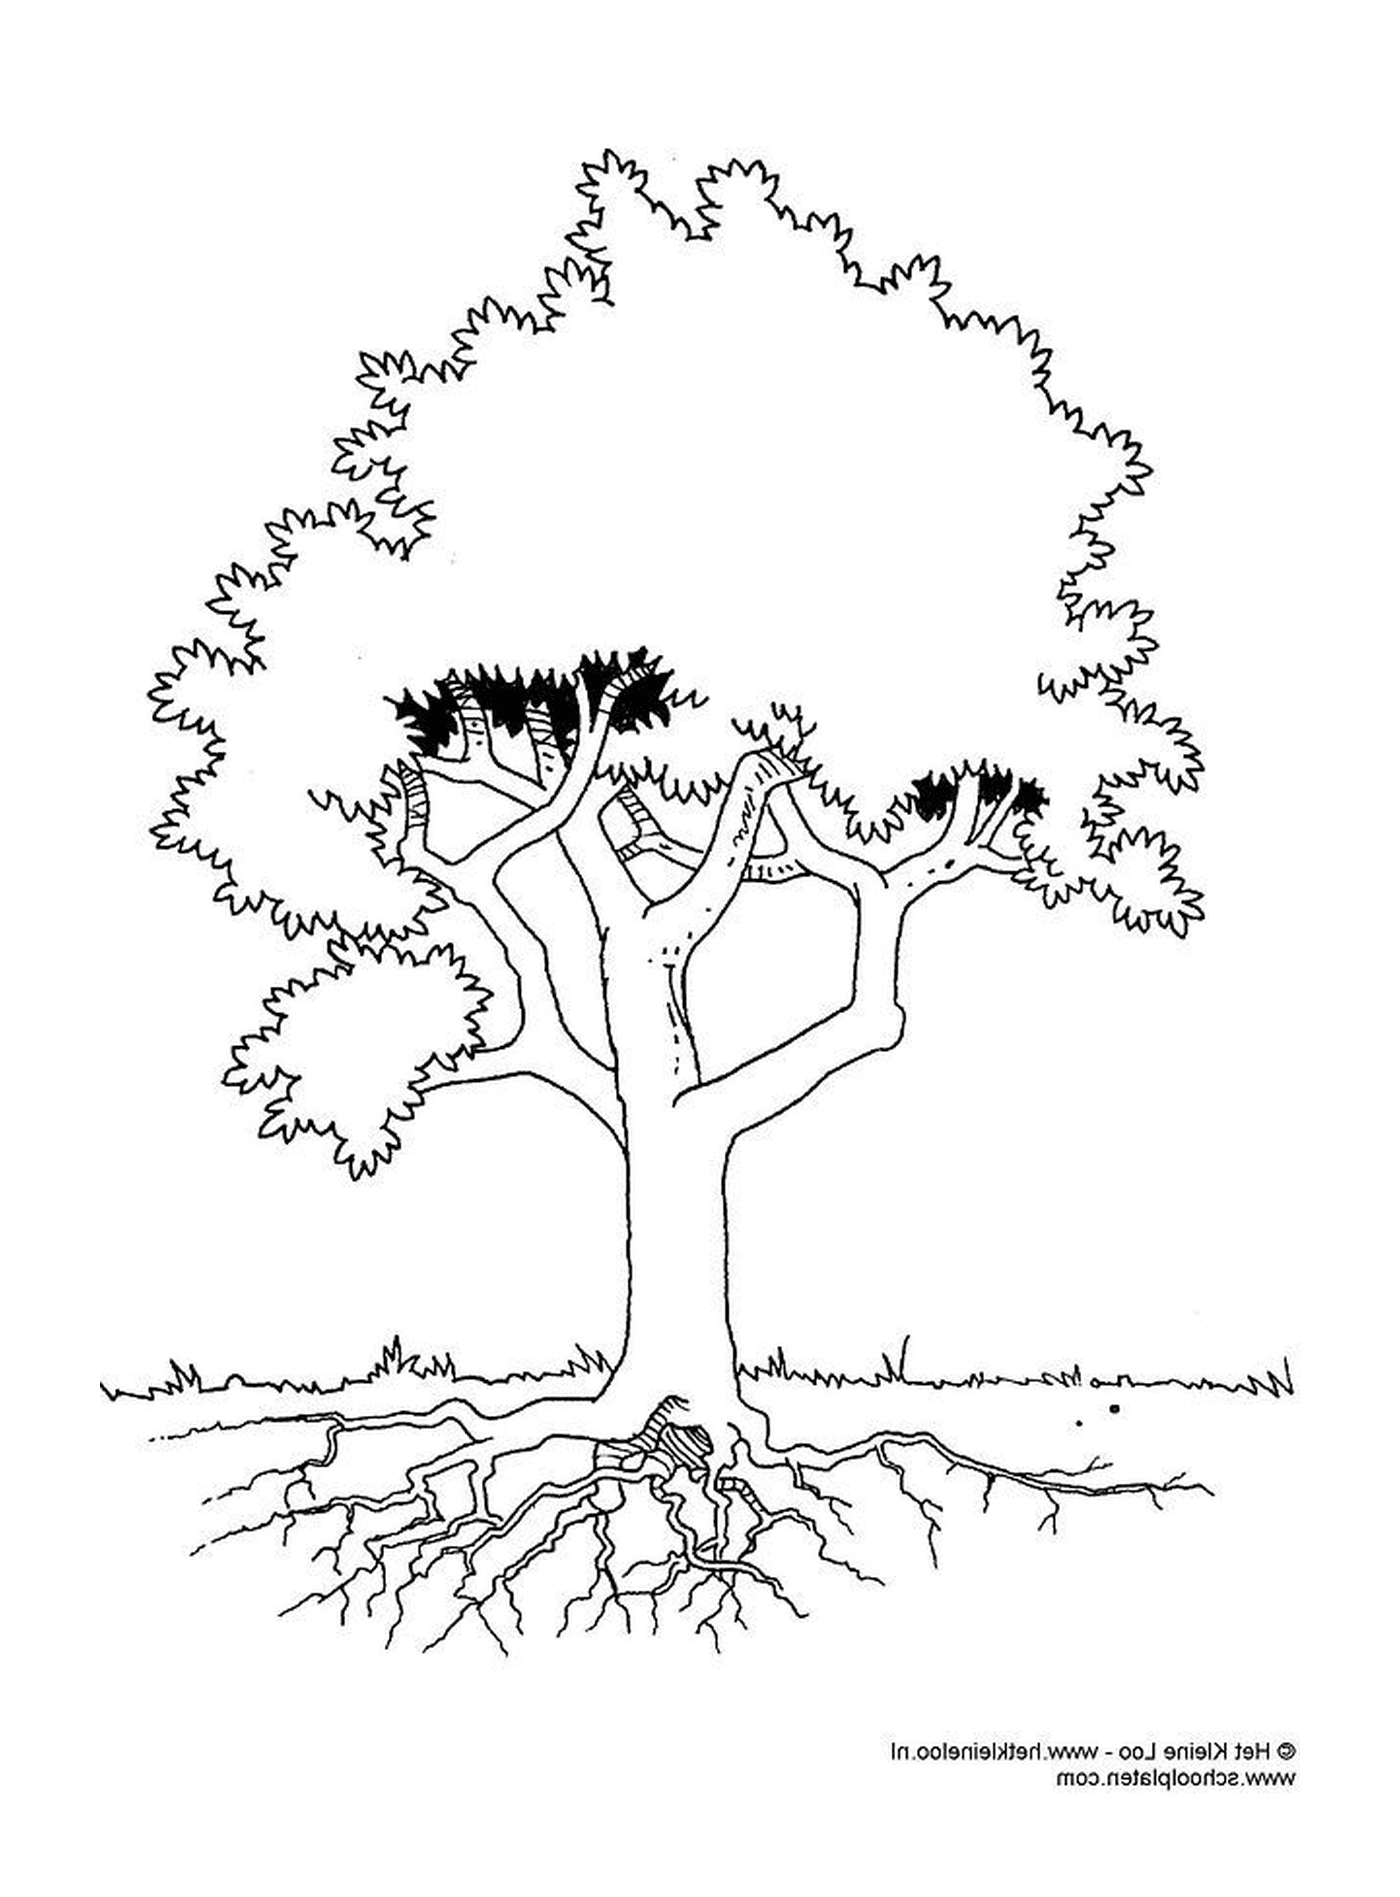  Un árbol con raíces 